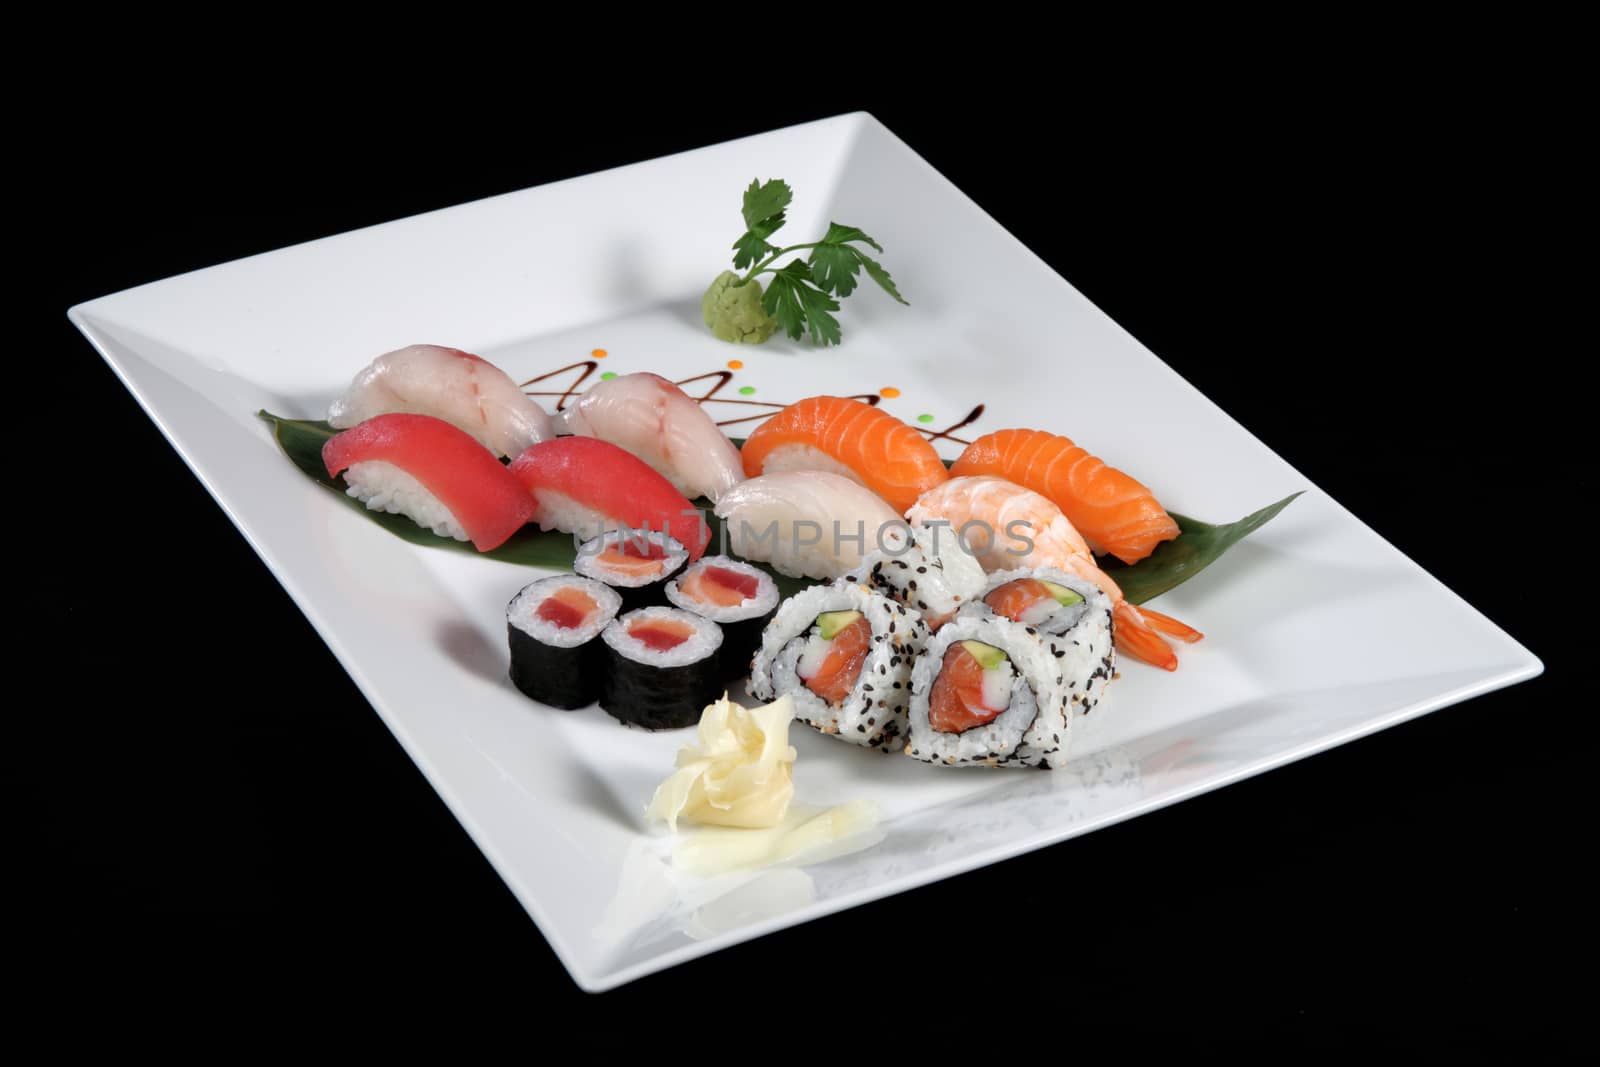 various sushi and sashimi with wasabi on white plate, black background